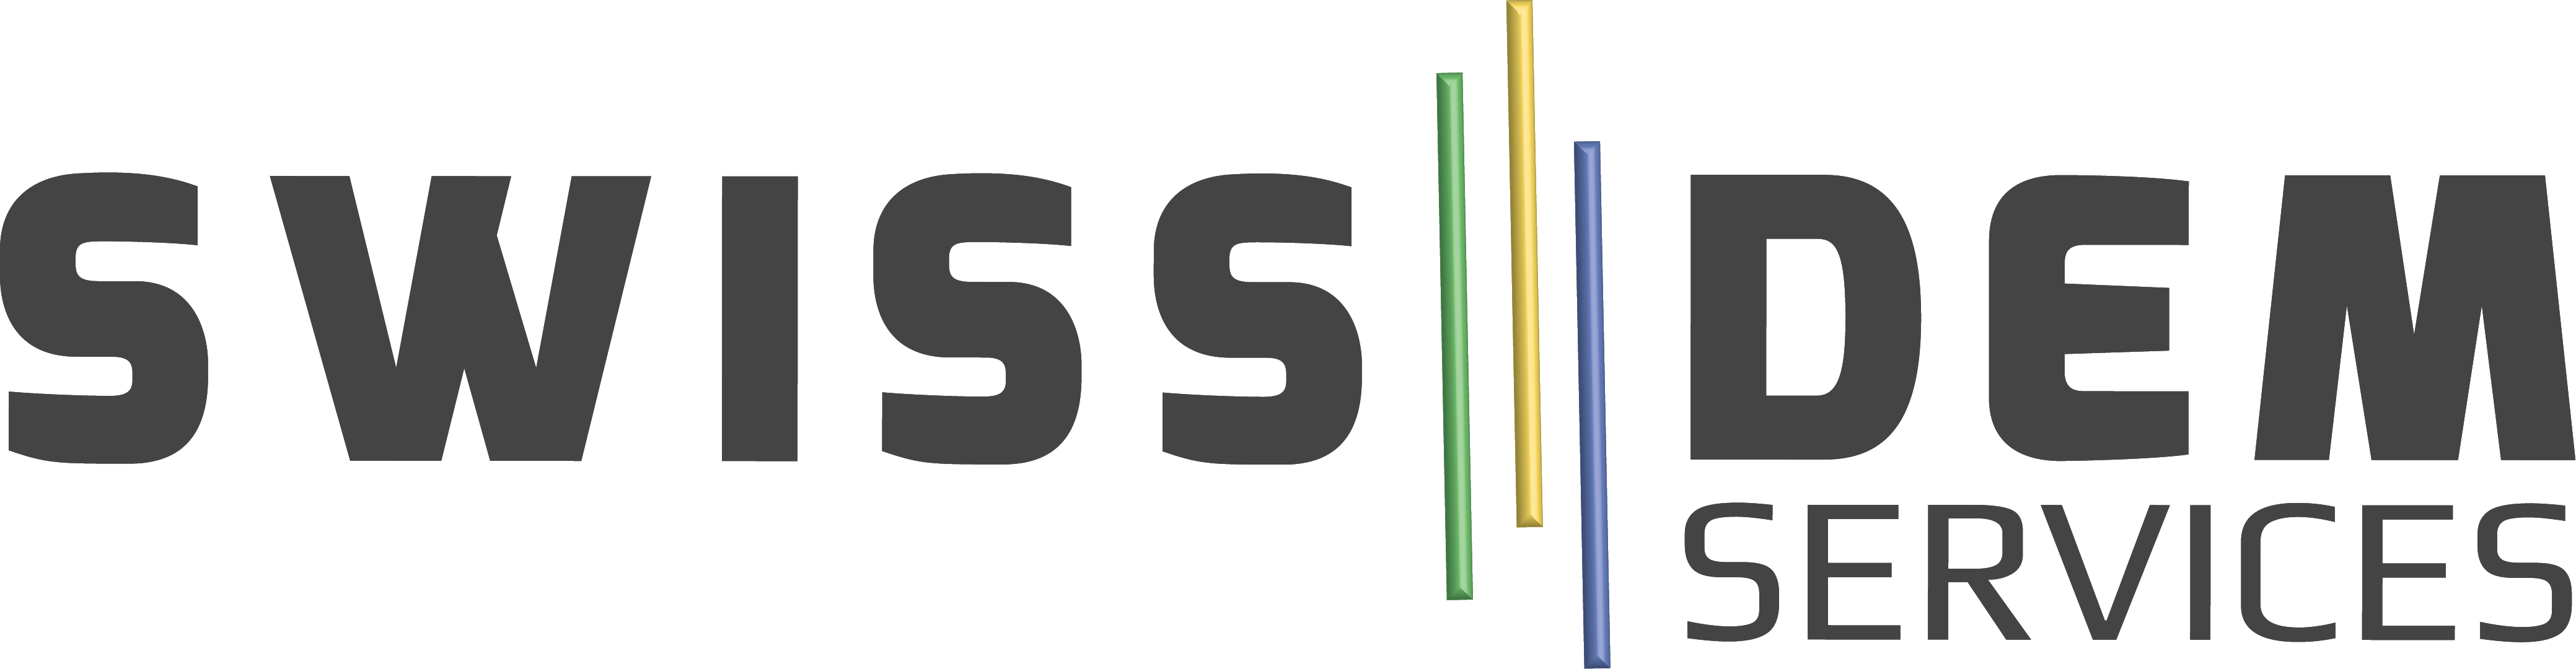 SwissDem Services